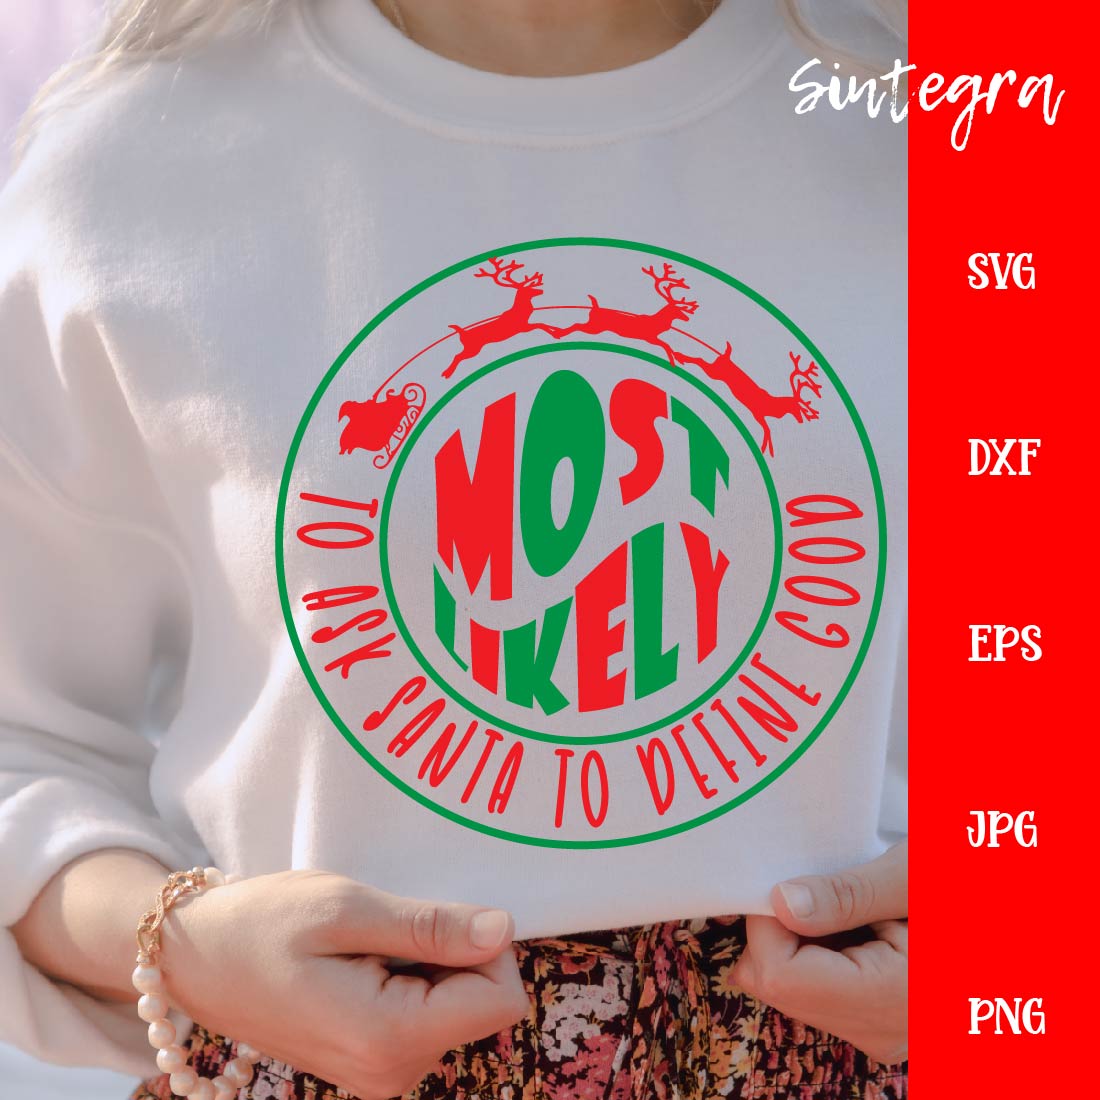 Image of a sweatshirt with a charming print on a Christmas theme.